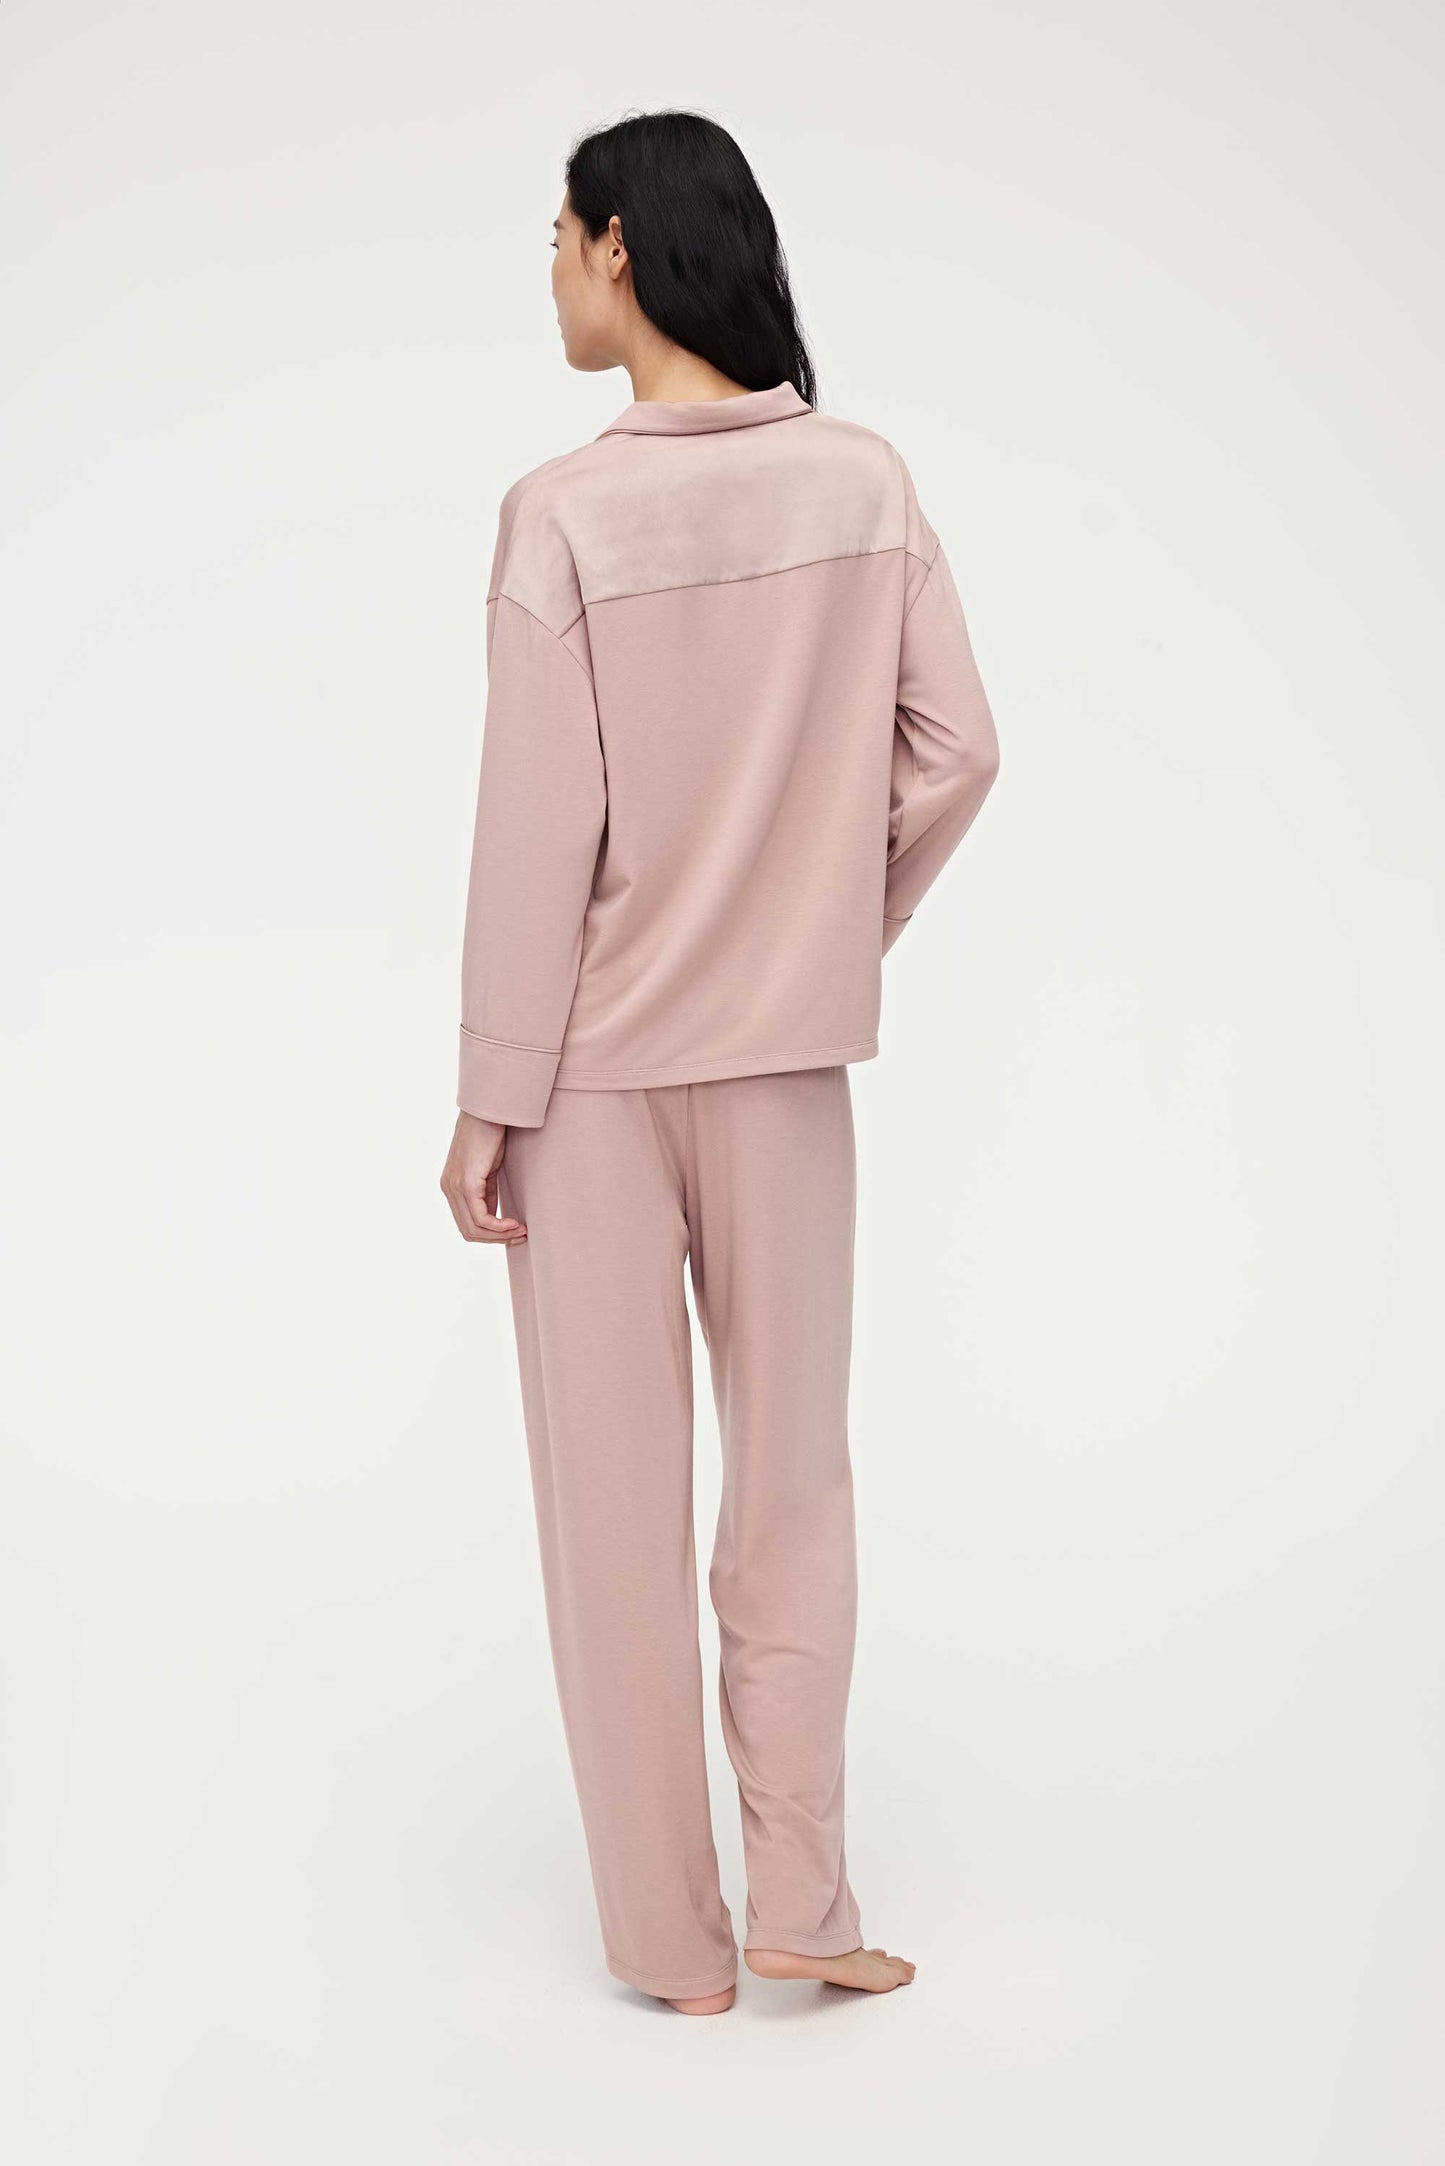 The back of pink pajama set